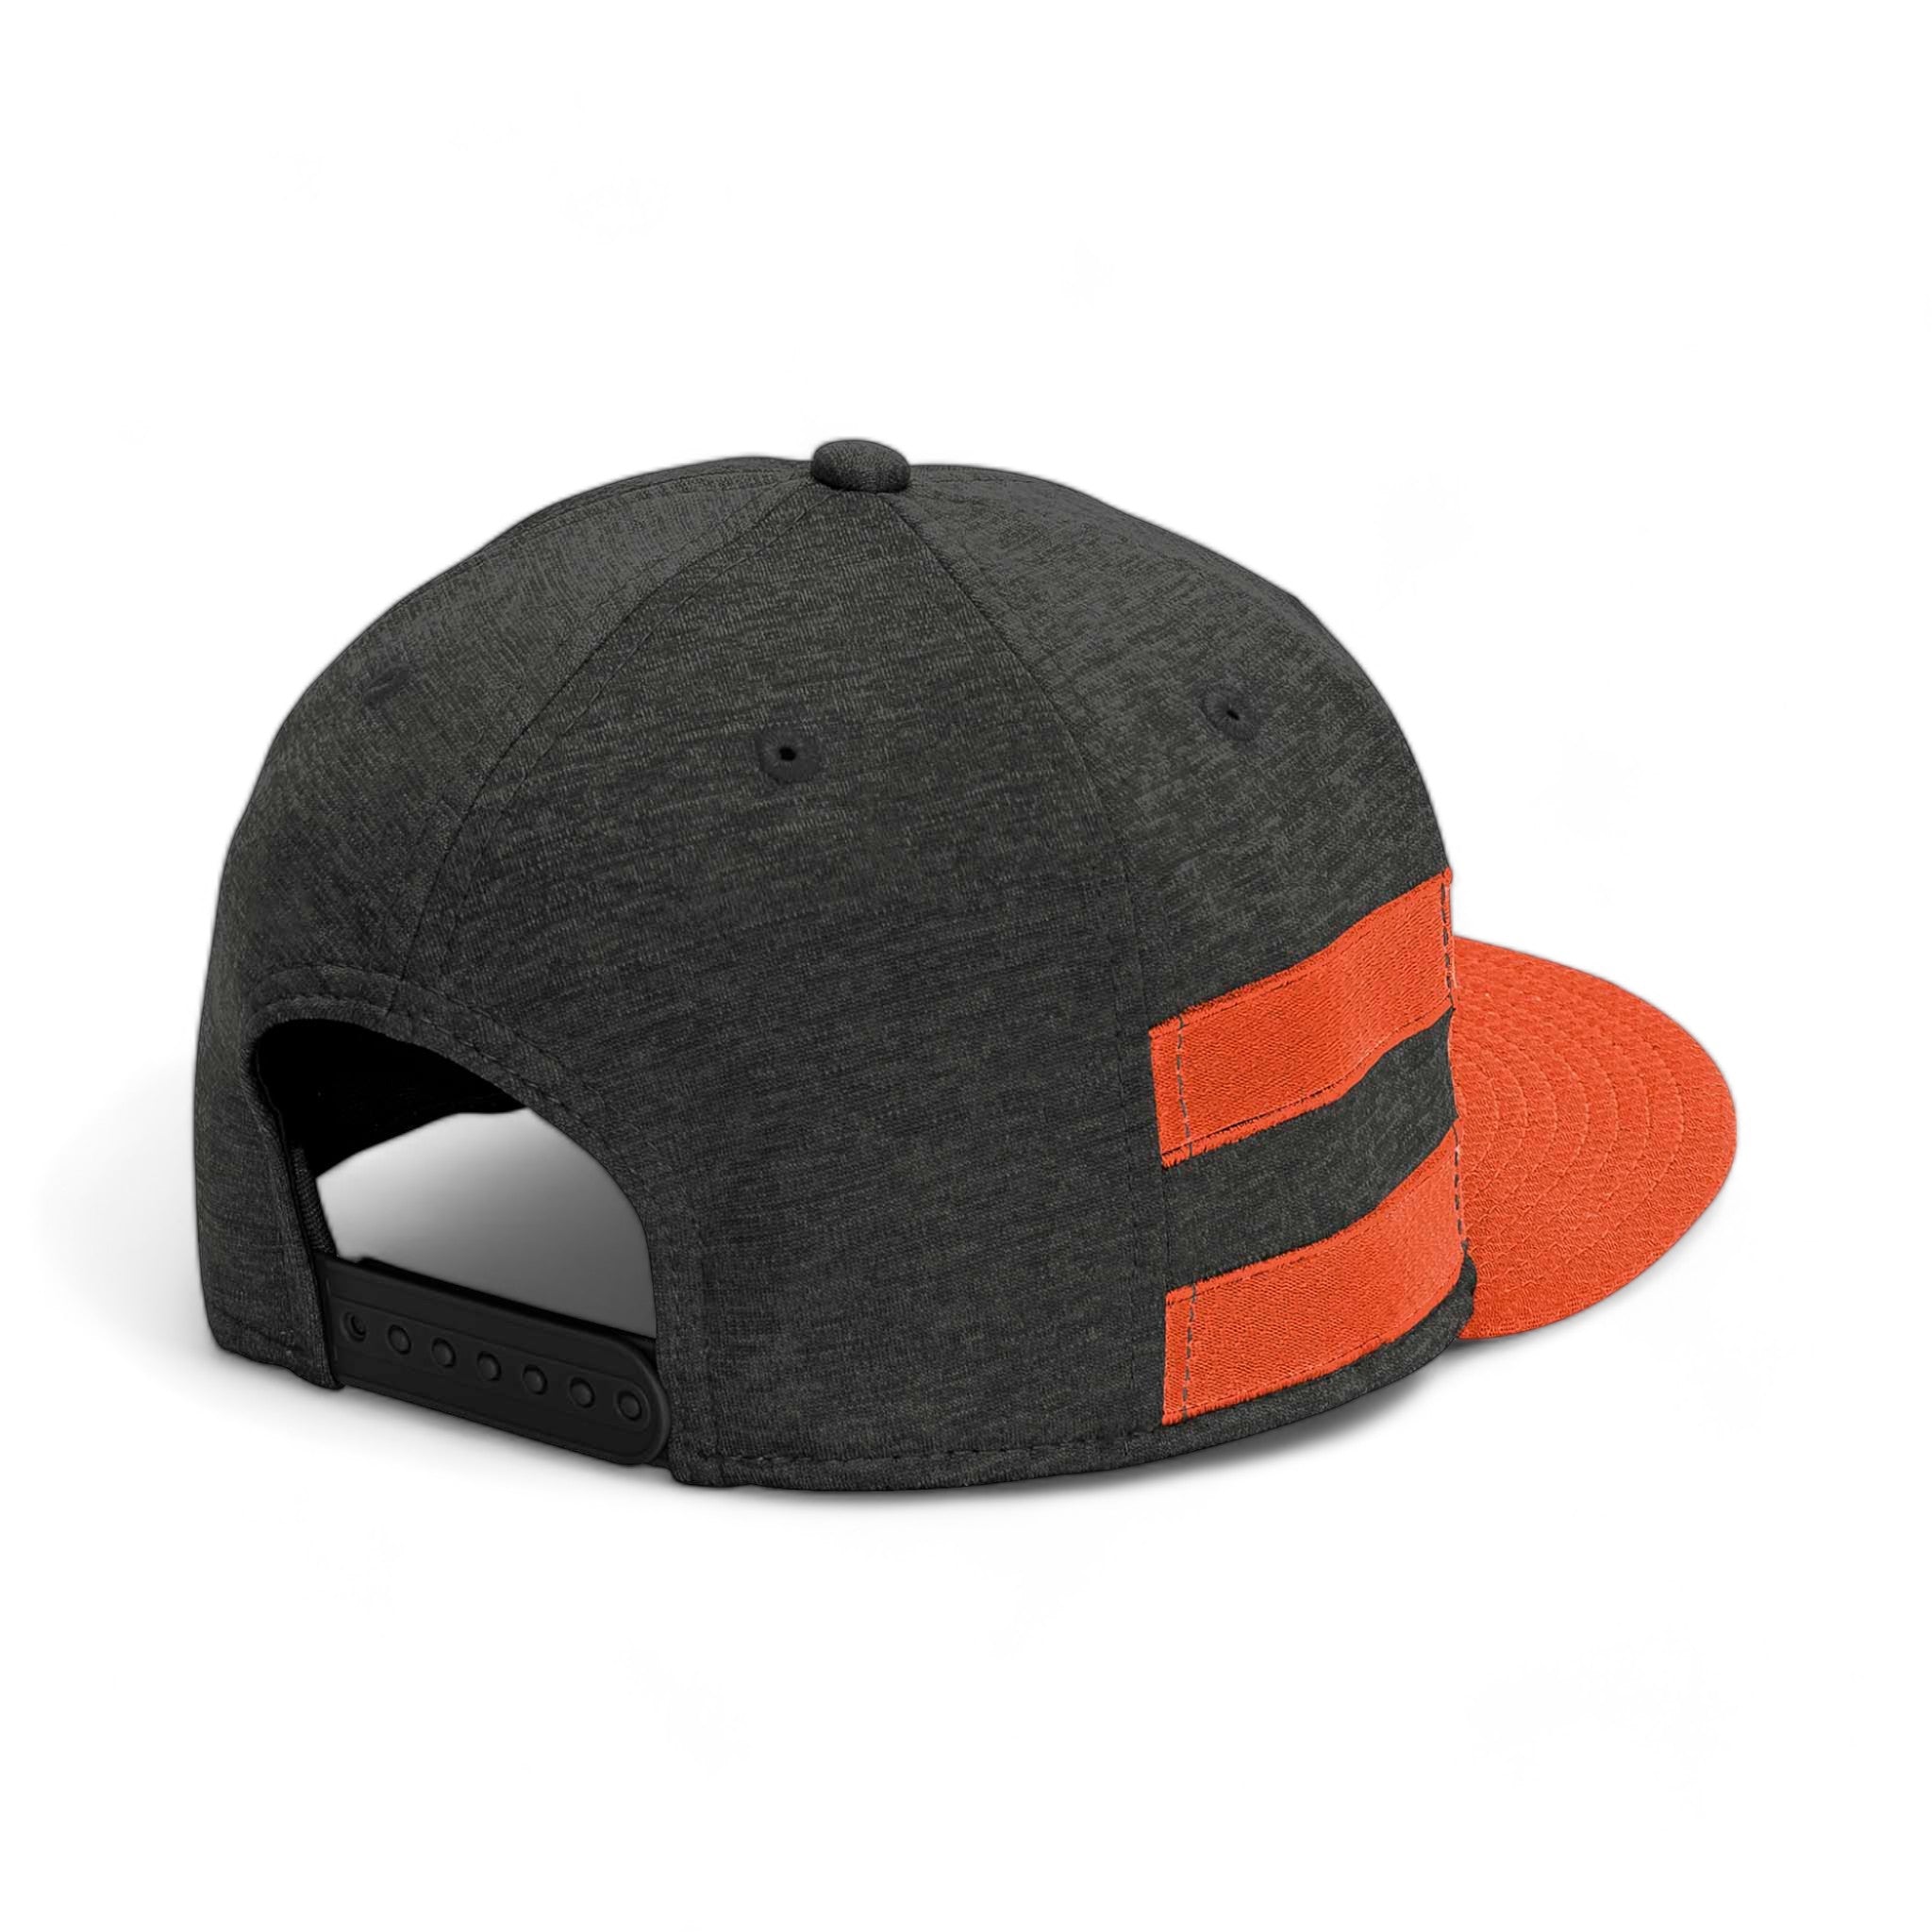 Back view of New Era NE408 custom hat in black shadow heather and deep orange